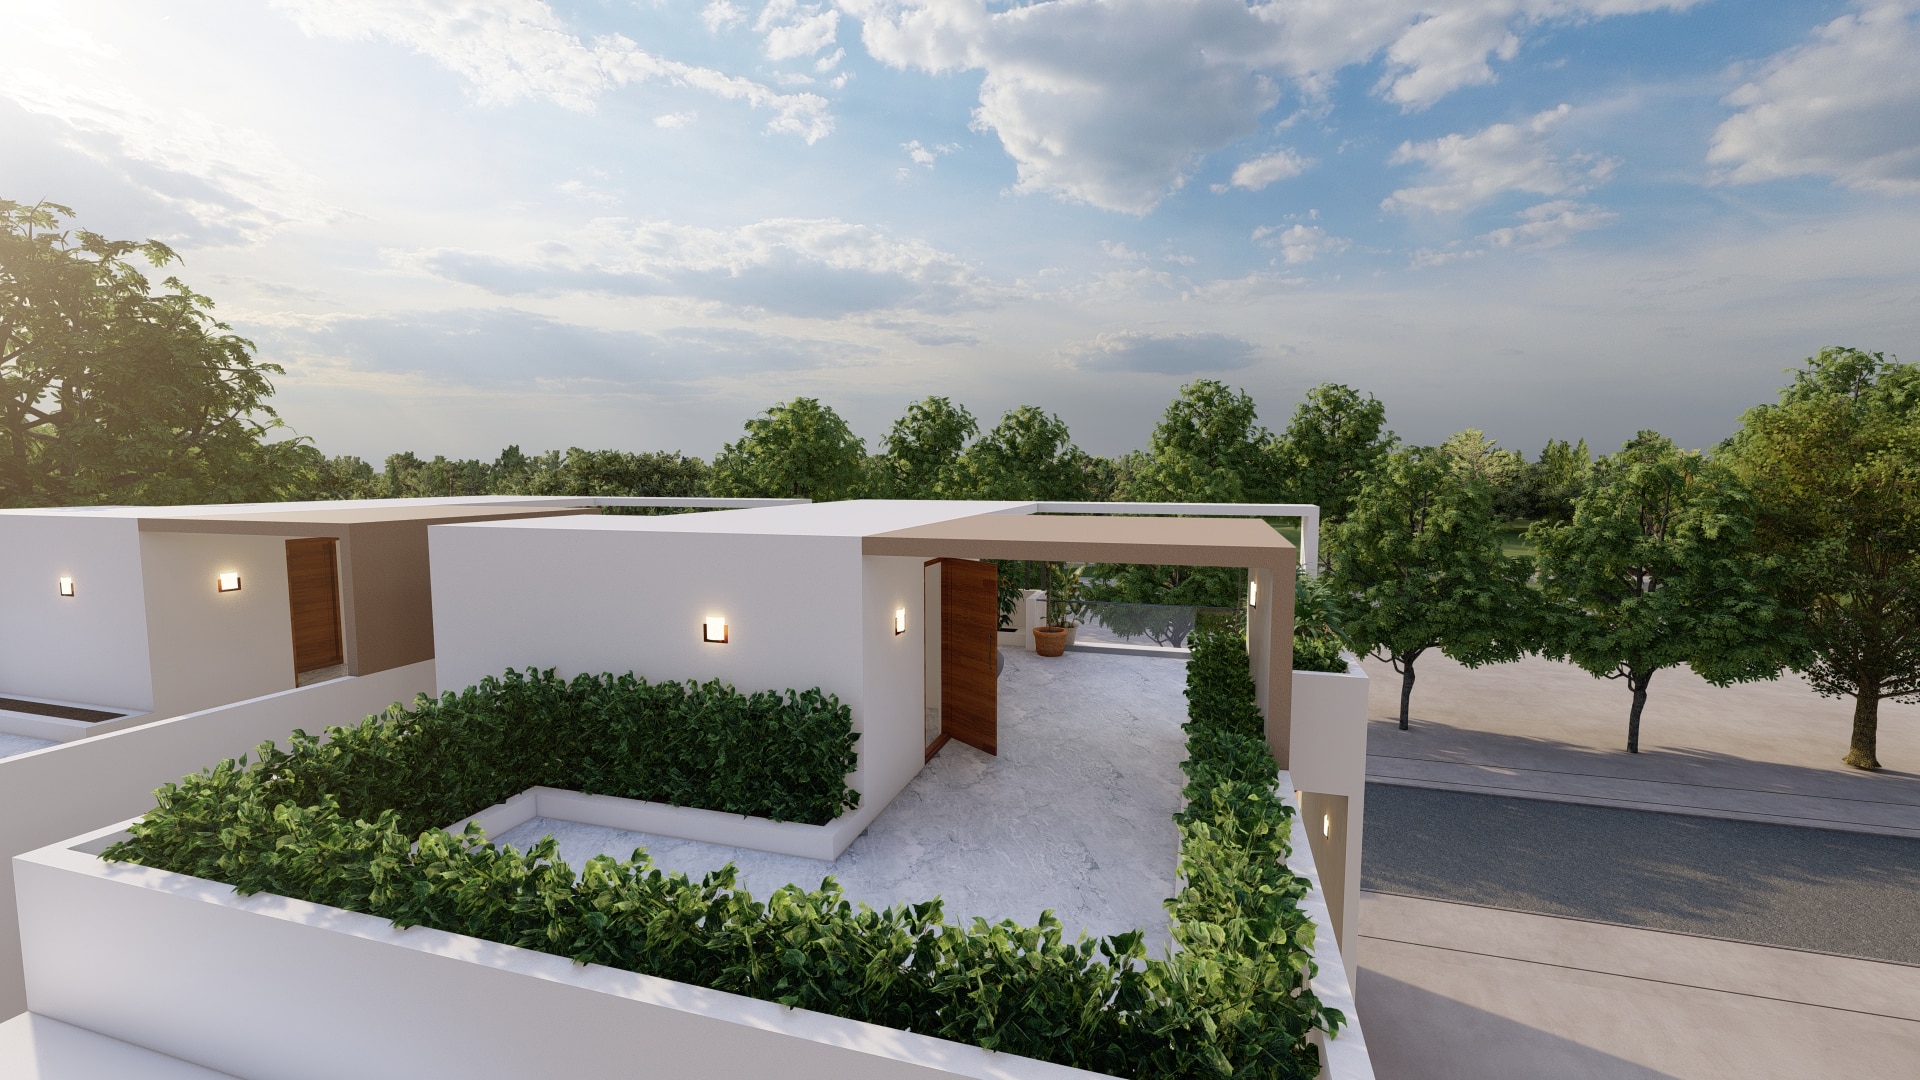 lavish terrace of new villa construction floor plan west facing 1800 sq ft by urban terrace